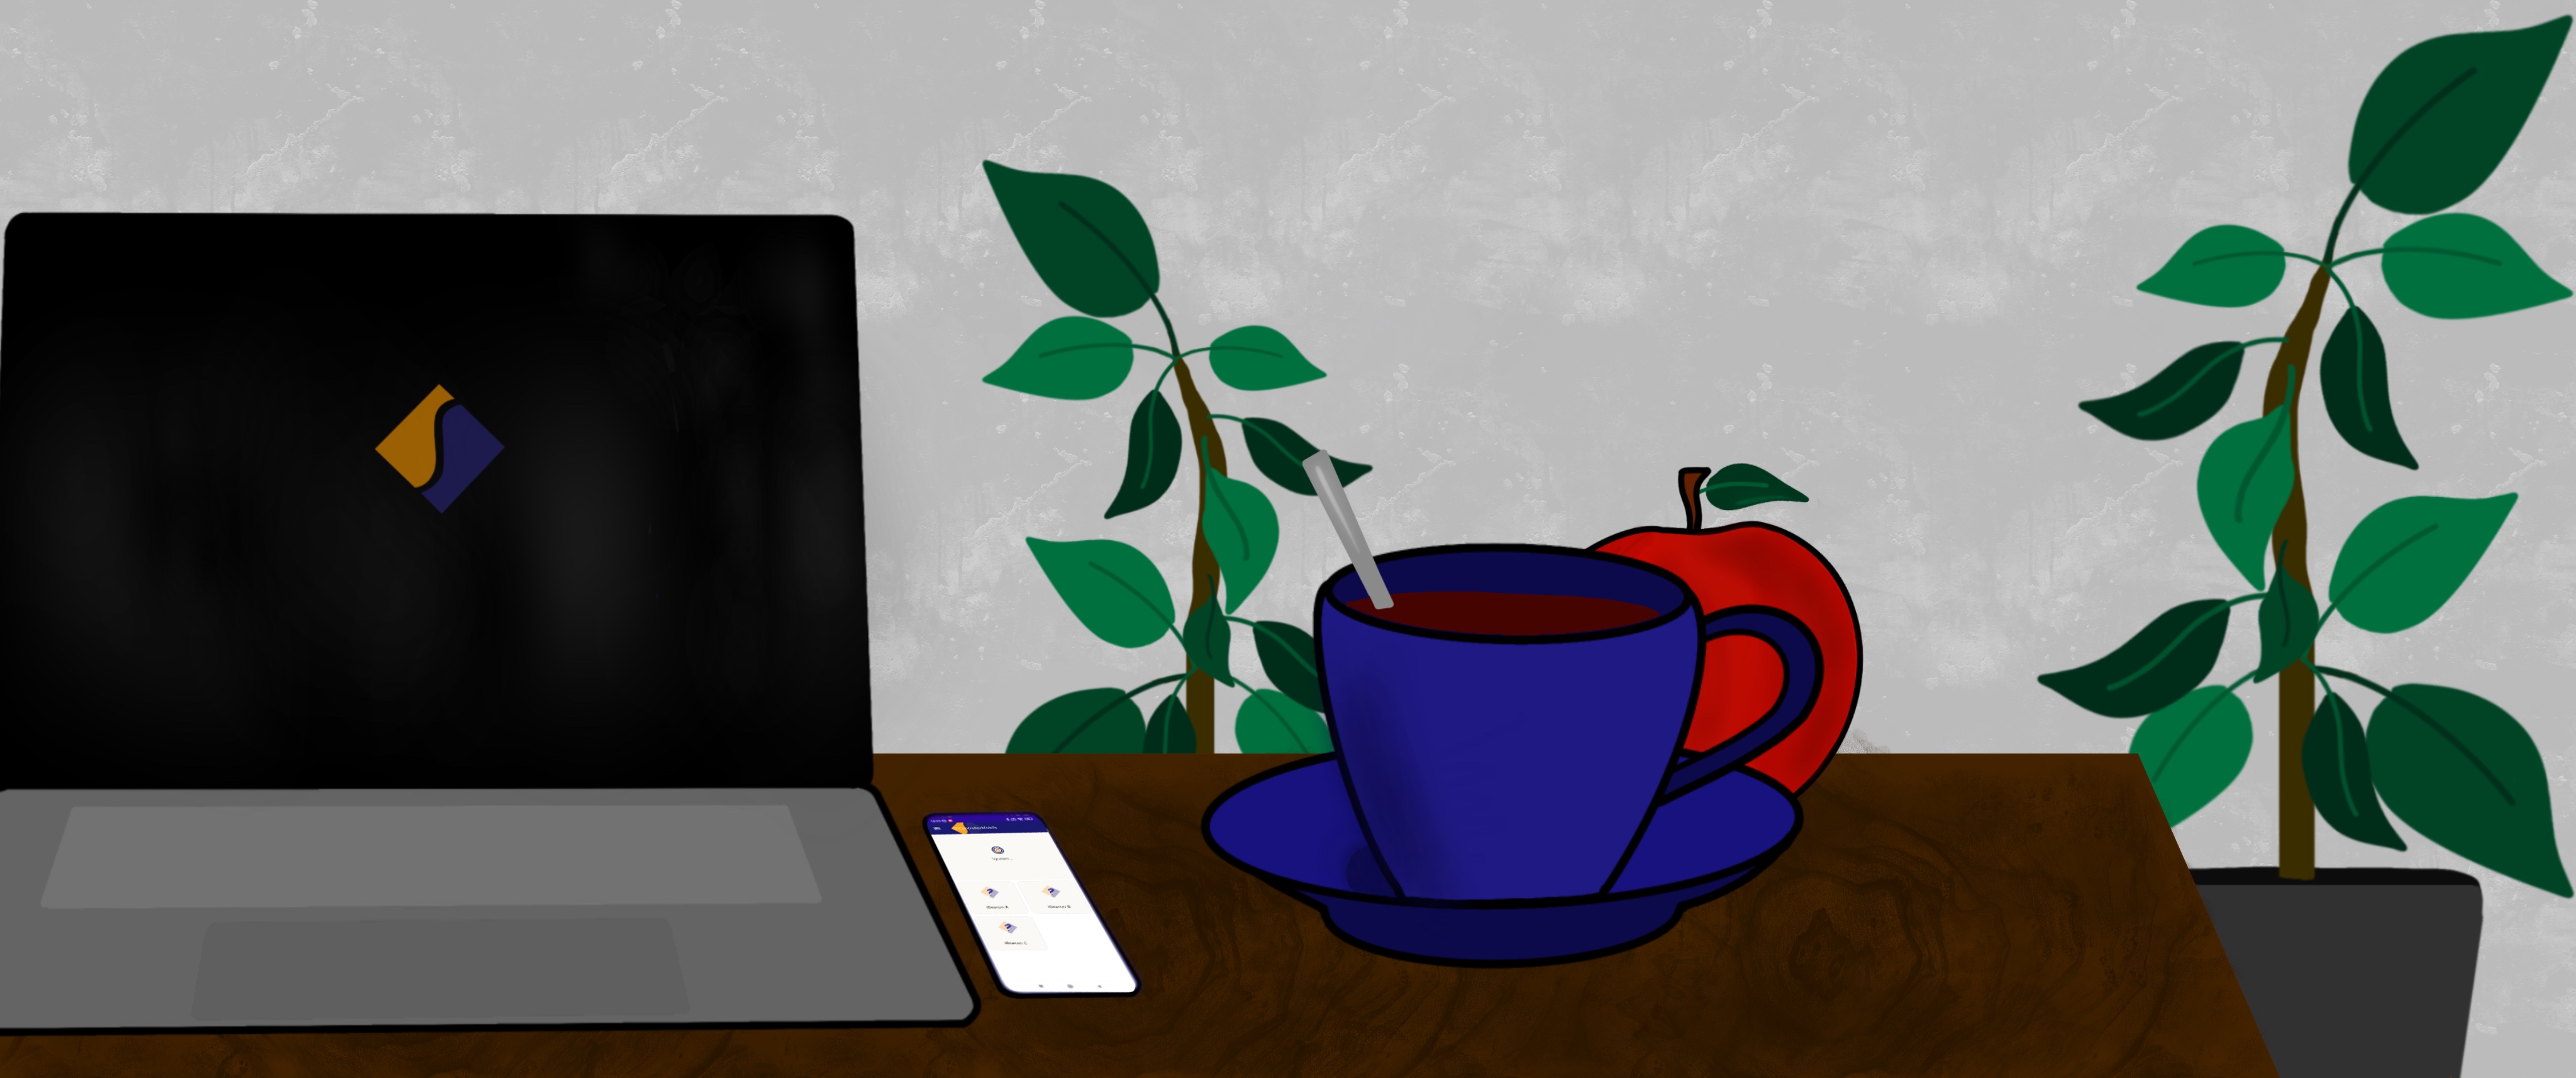 Zveme Vás k nám do Smartdata na softwarový šálek kávy